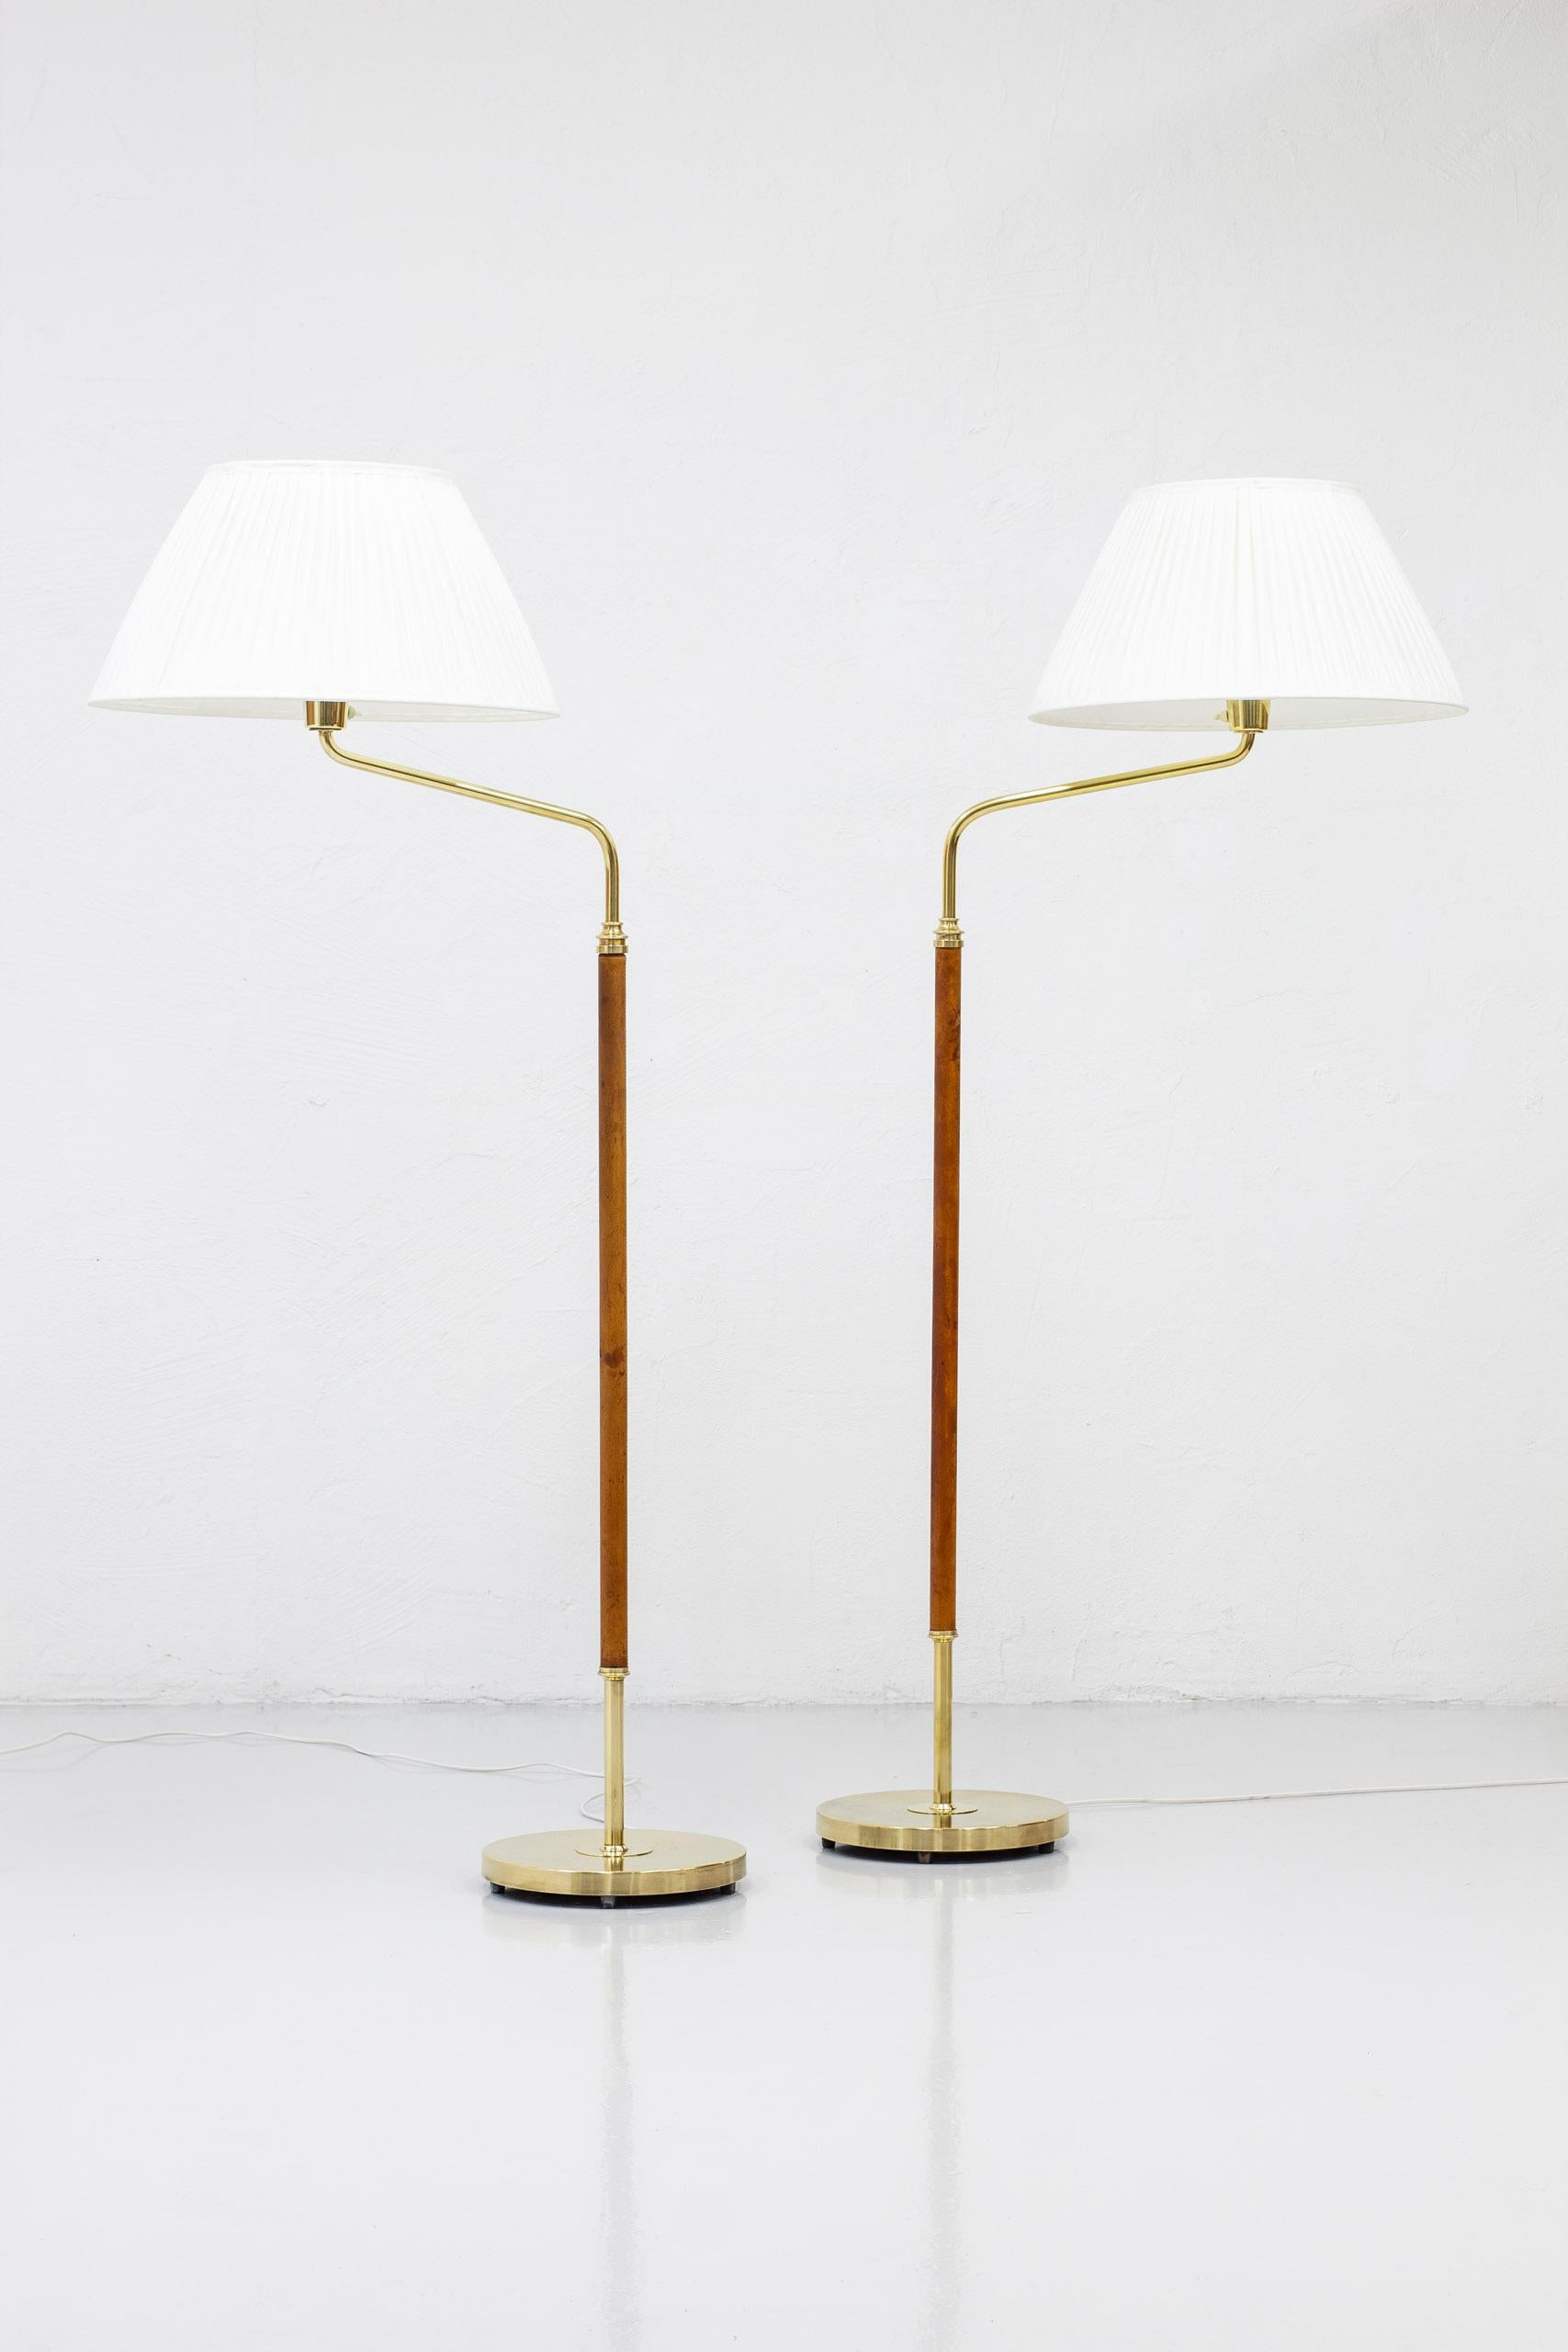 Scandinavian Modern Pair of Floor Lamps Model 31644 Designed by Bertil Brisborg